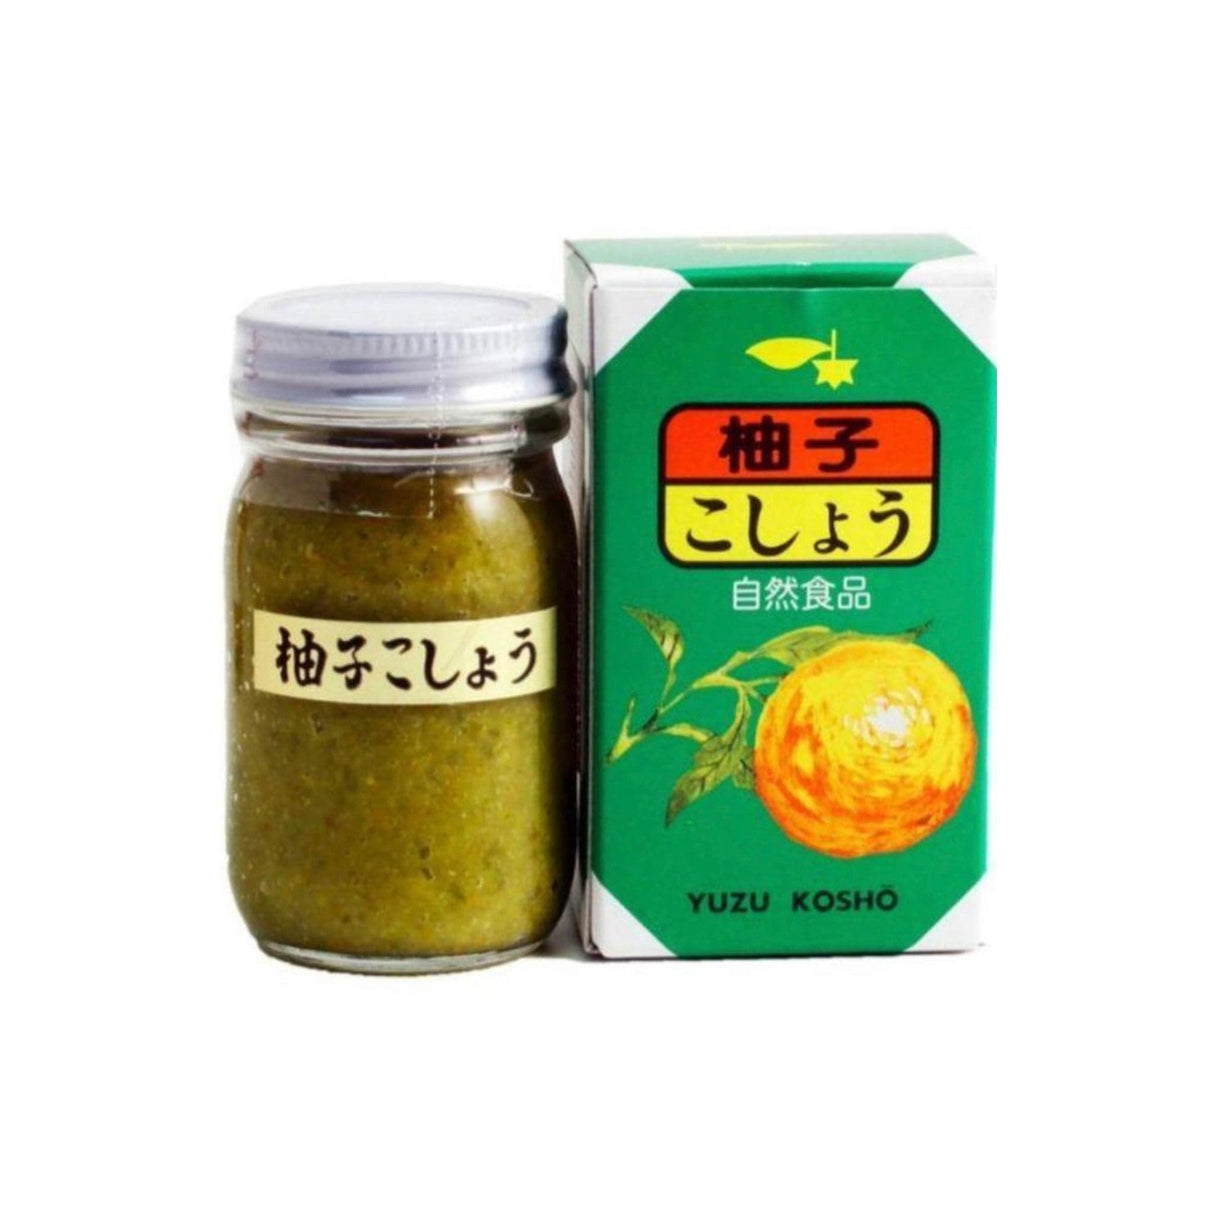 Yuzu Kosho Pepper with Citrus Yuzu Green